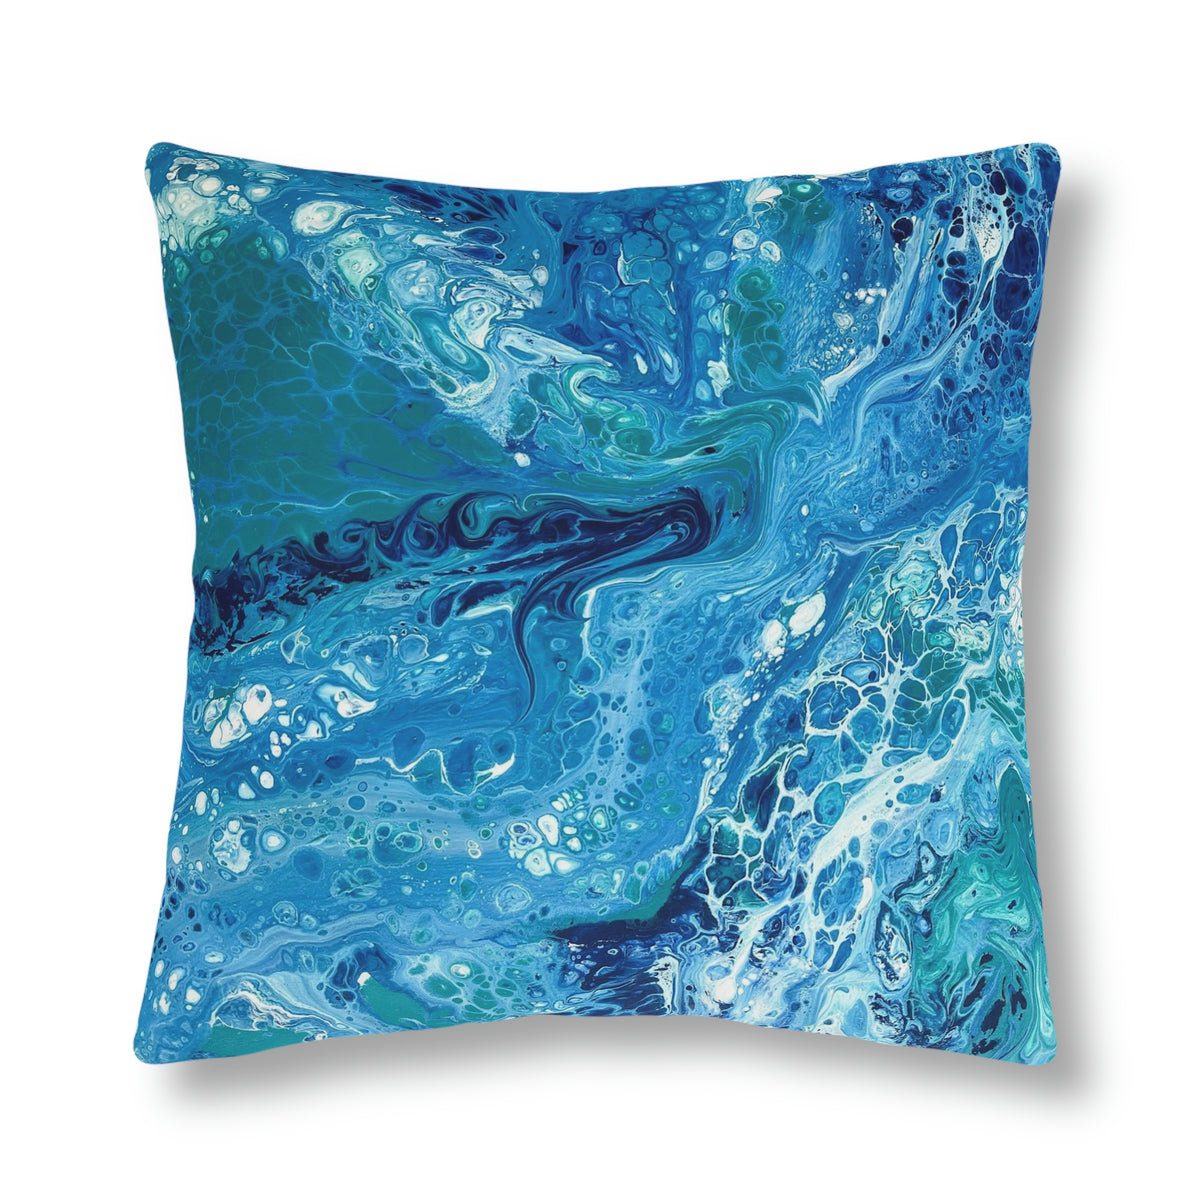 Beachy Blues Waterproof Pillow (Varying Sizes) guy